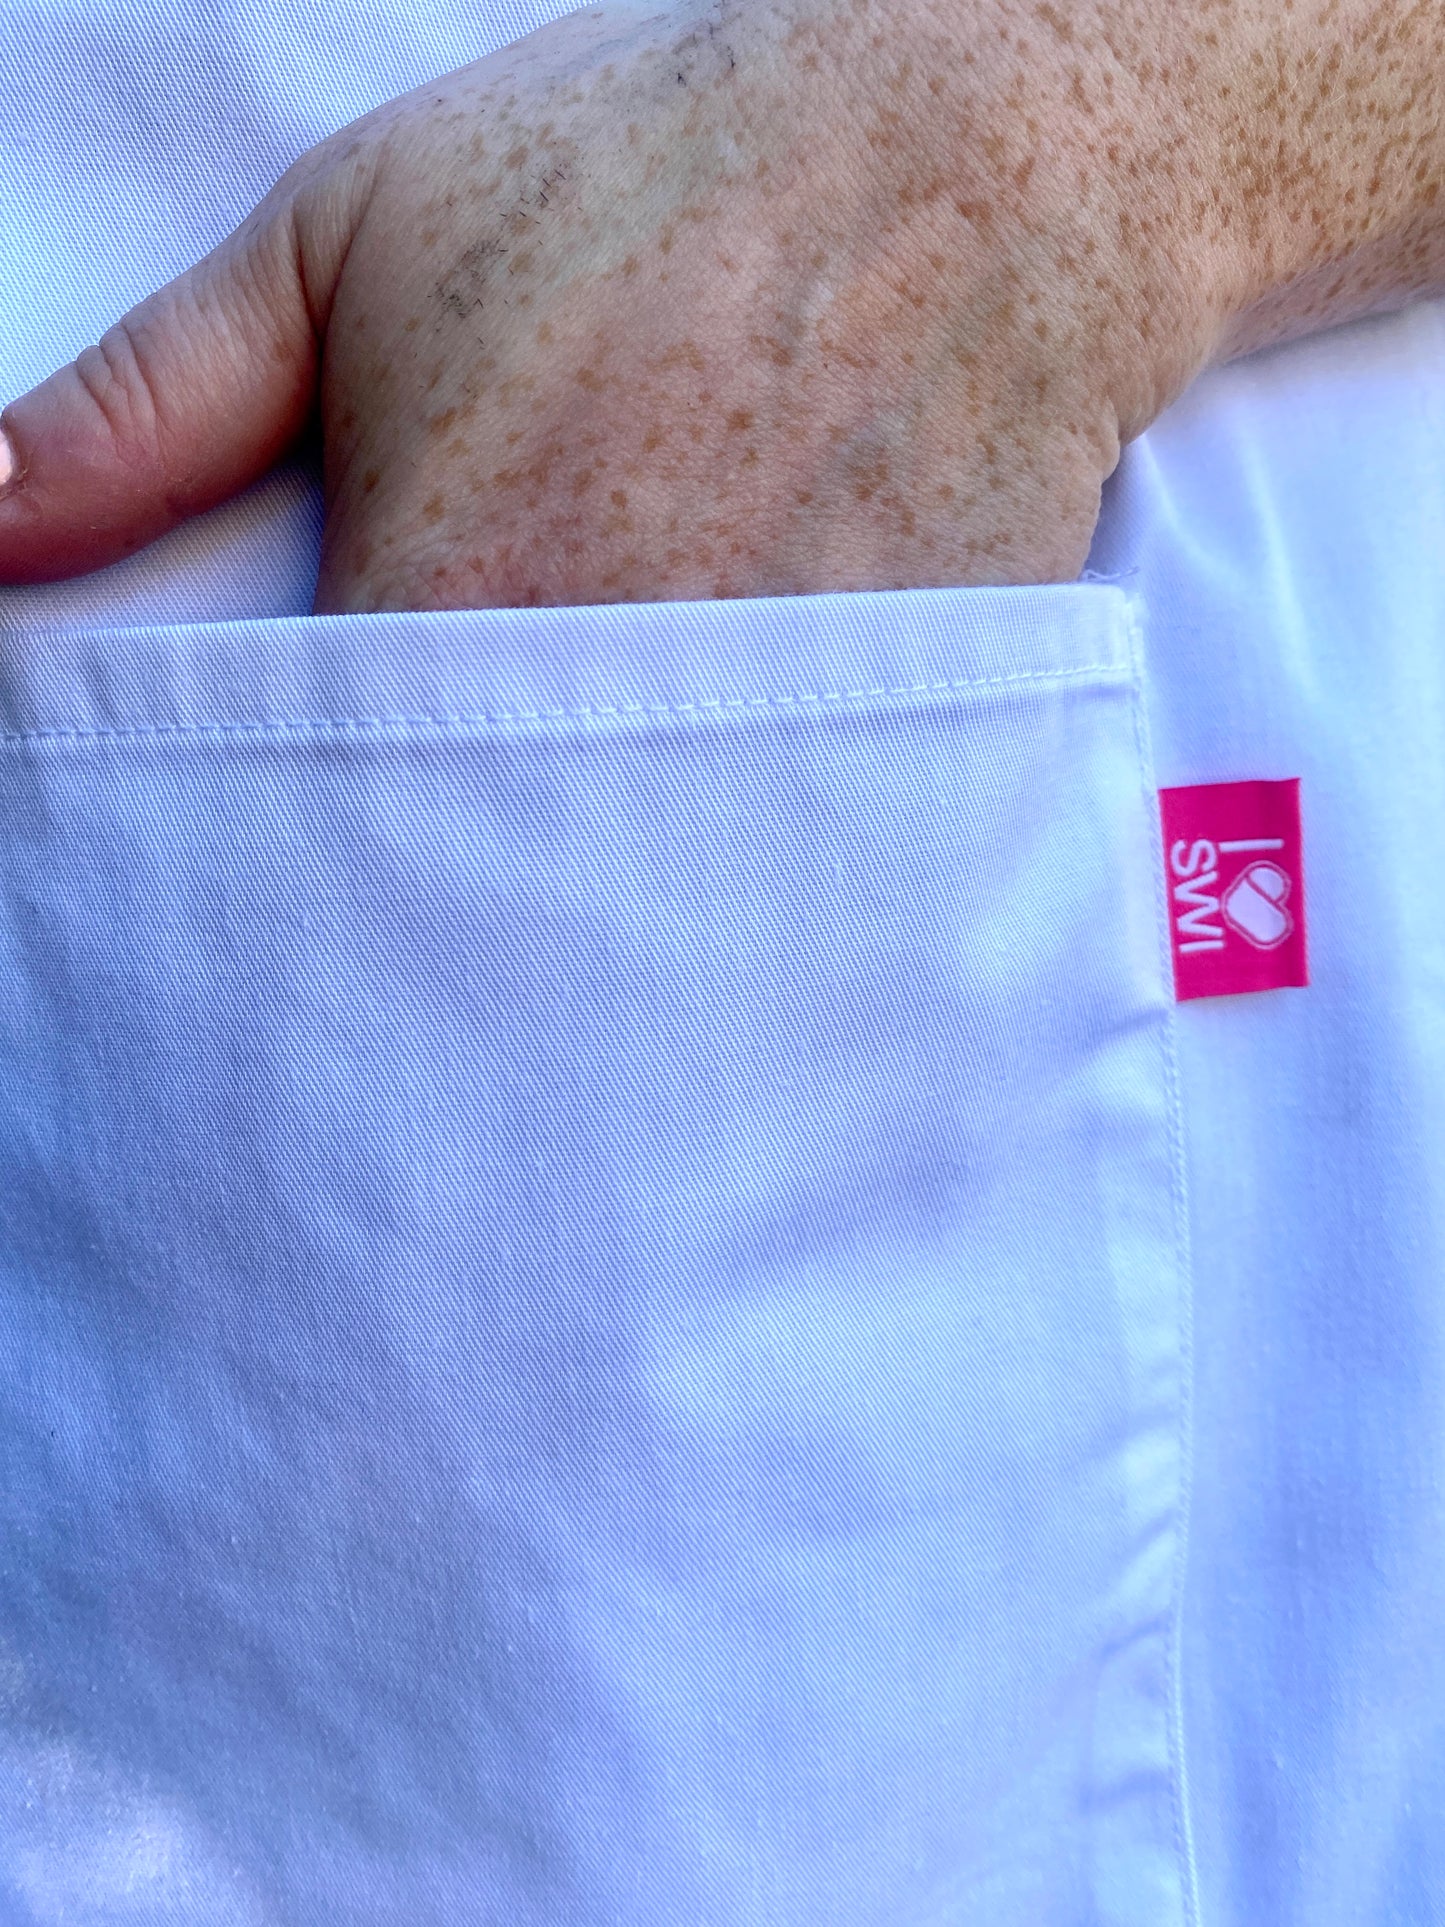 SWI Apron - White with pink SWI label